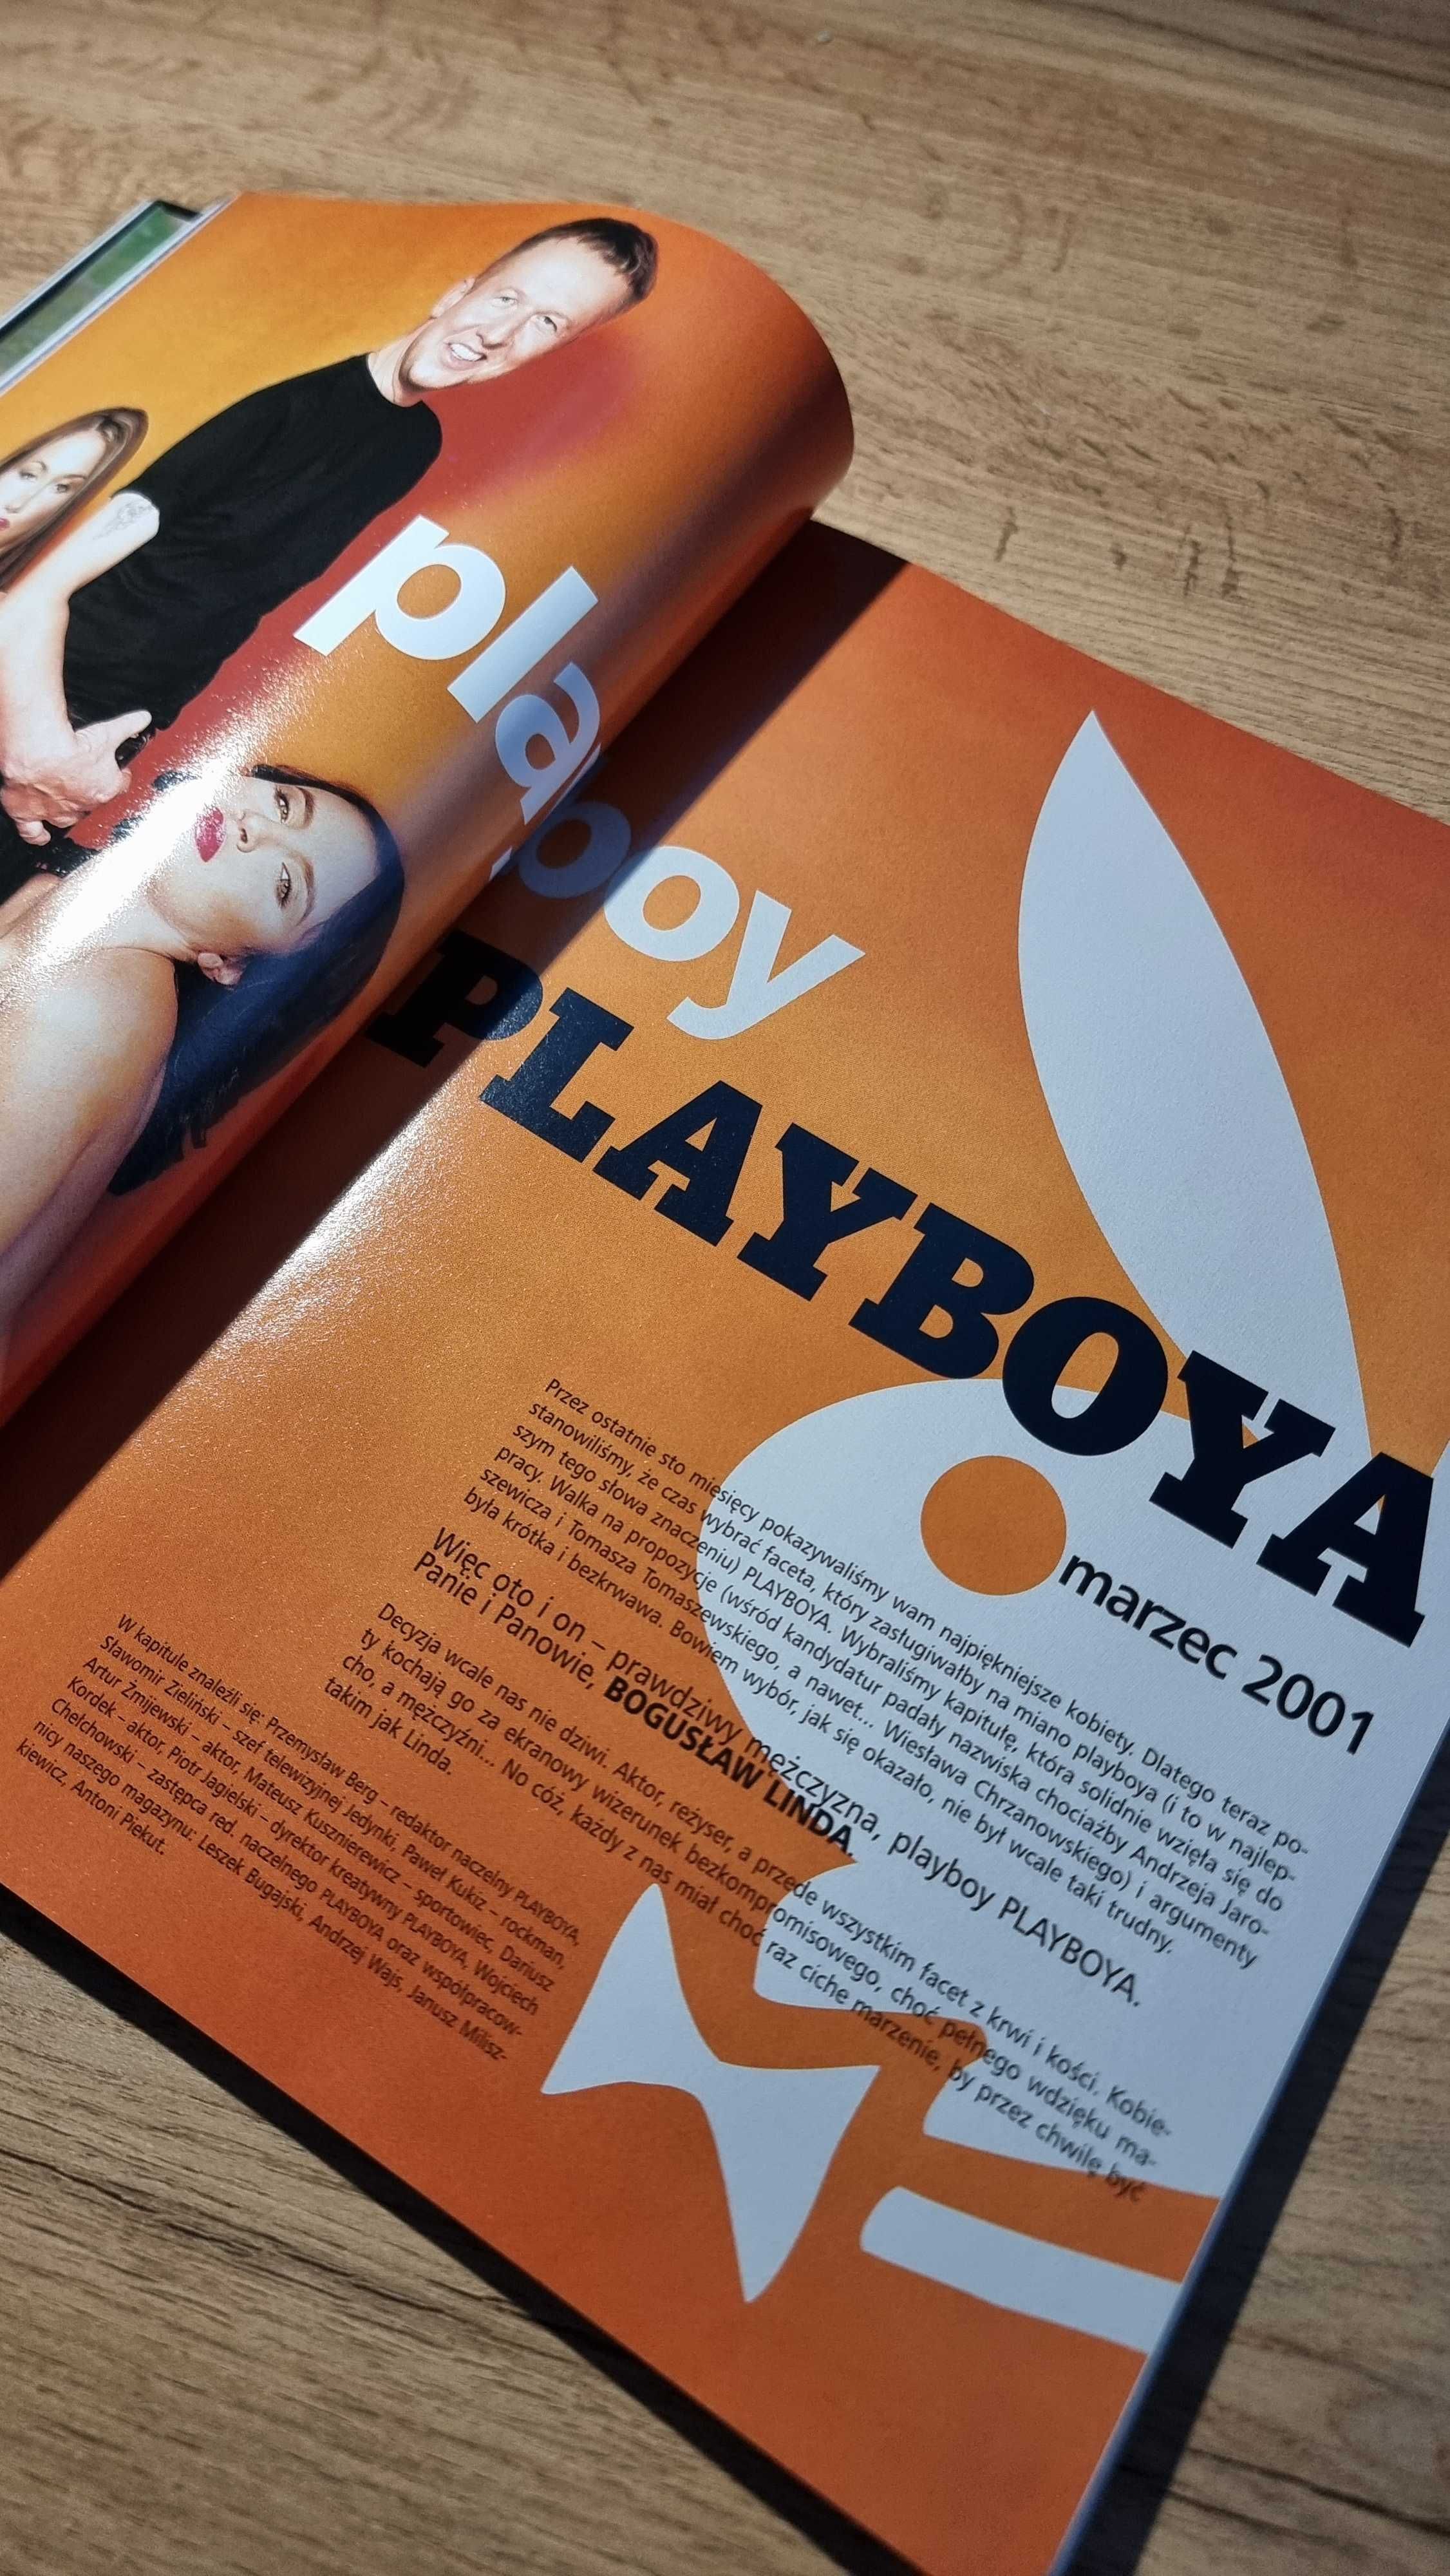 Playboy 2001 - Horodyńska, Paskuda, Łukomska, Bogusław Linda